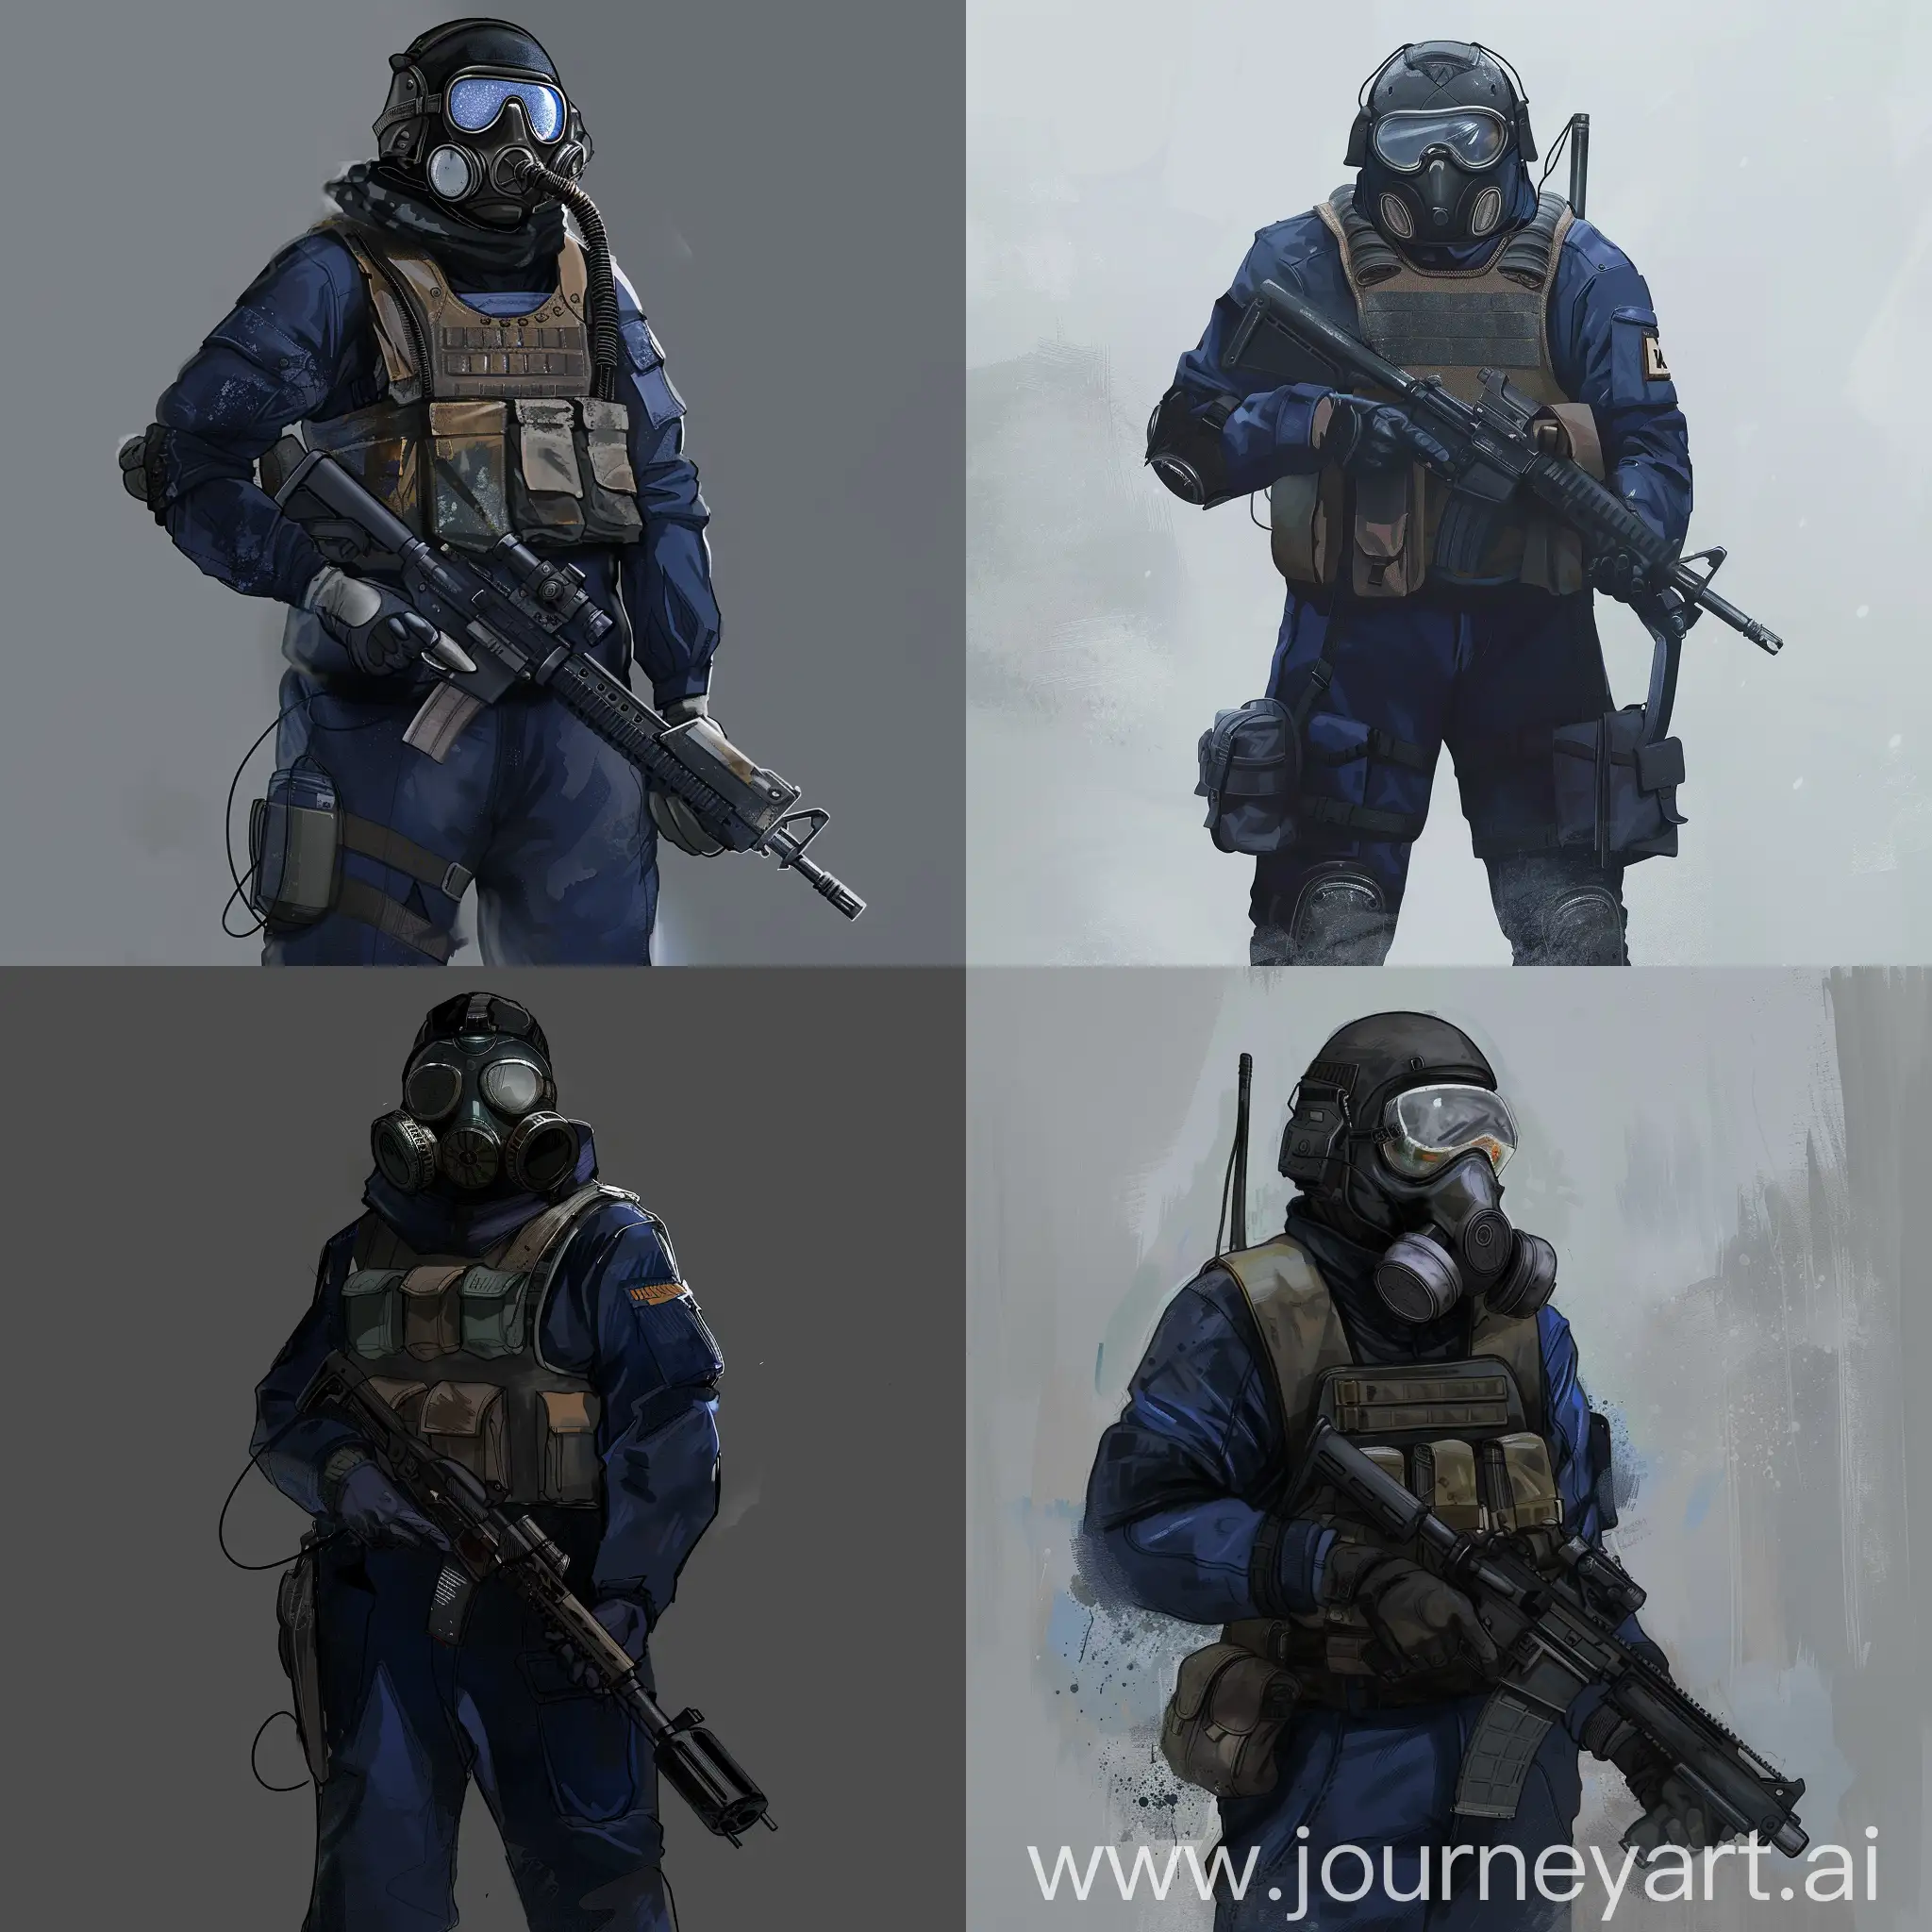 Concept art character Mercenary stalker, gasmask on face, military vest on body, dark blue jumpsuit, sniper rifle in the hands.